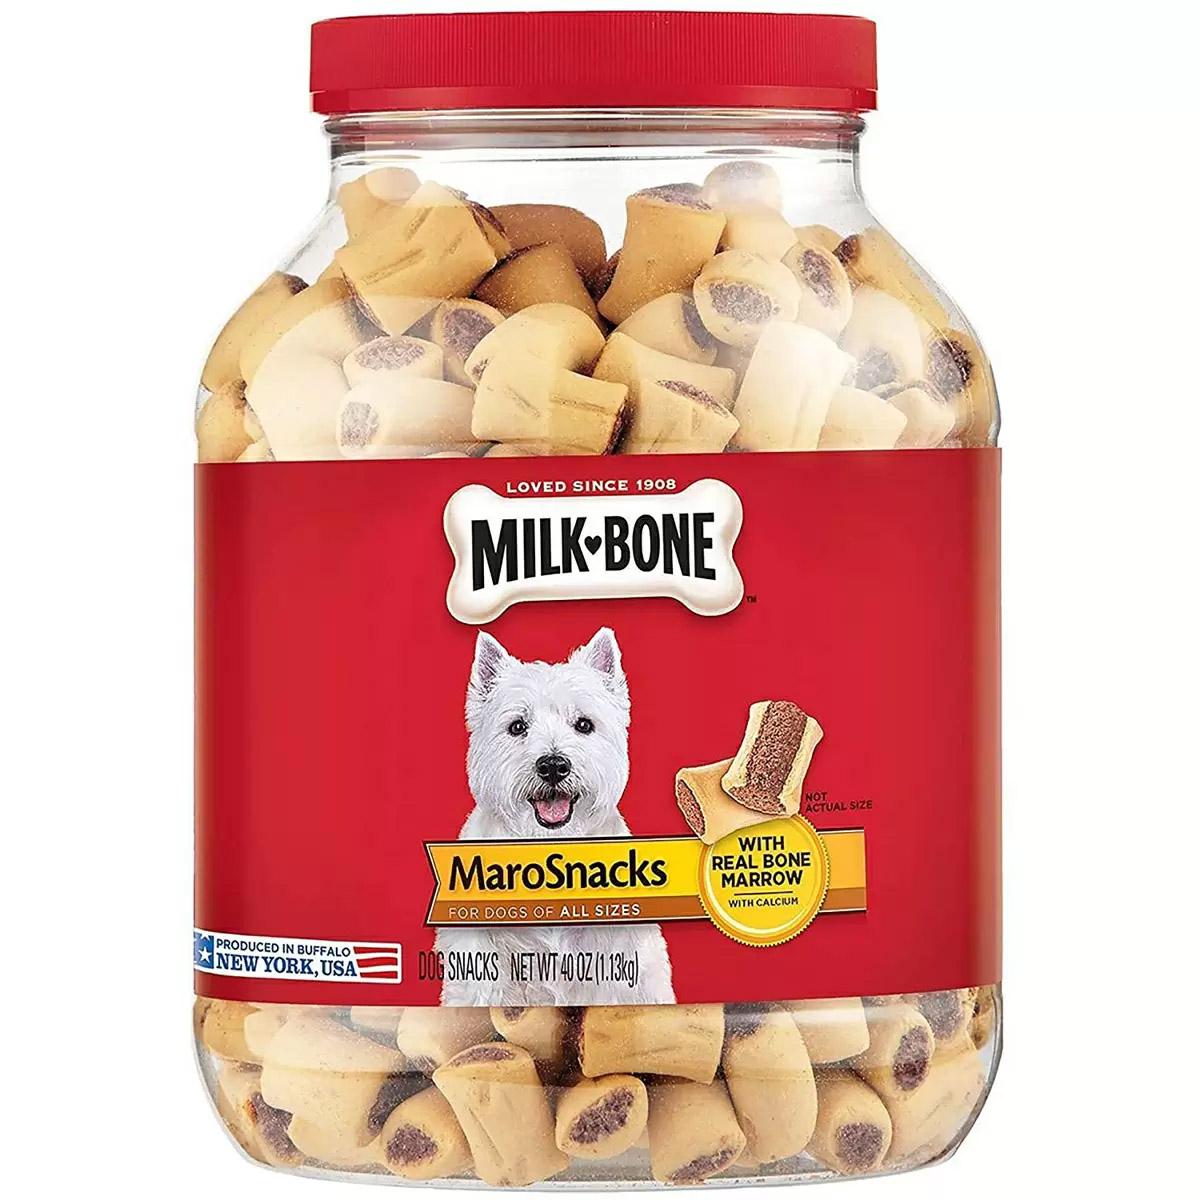 40oz Milk Bone MaroSnacks Dog Treats for $6.34 Shipped